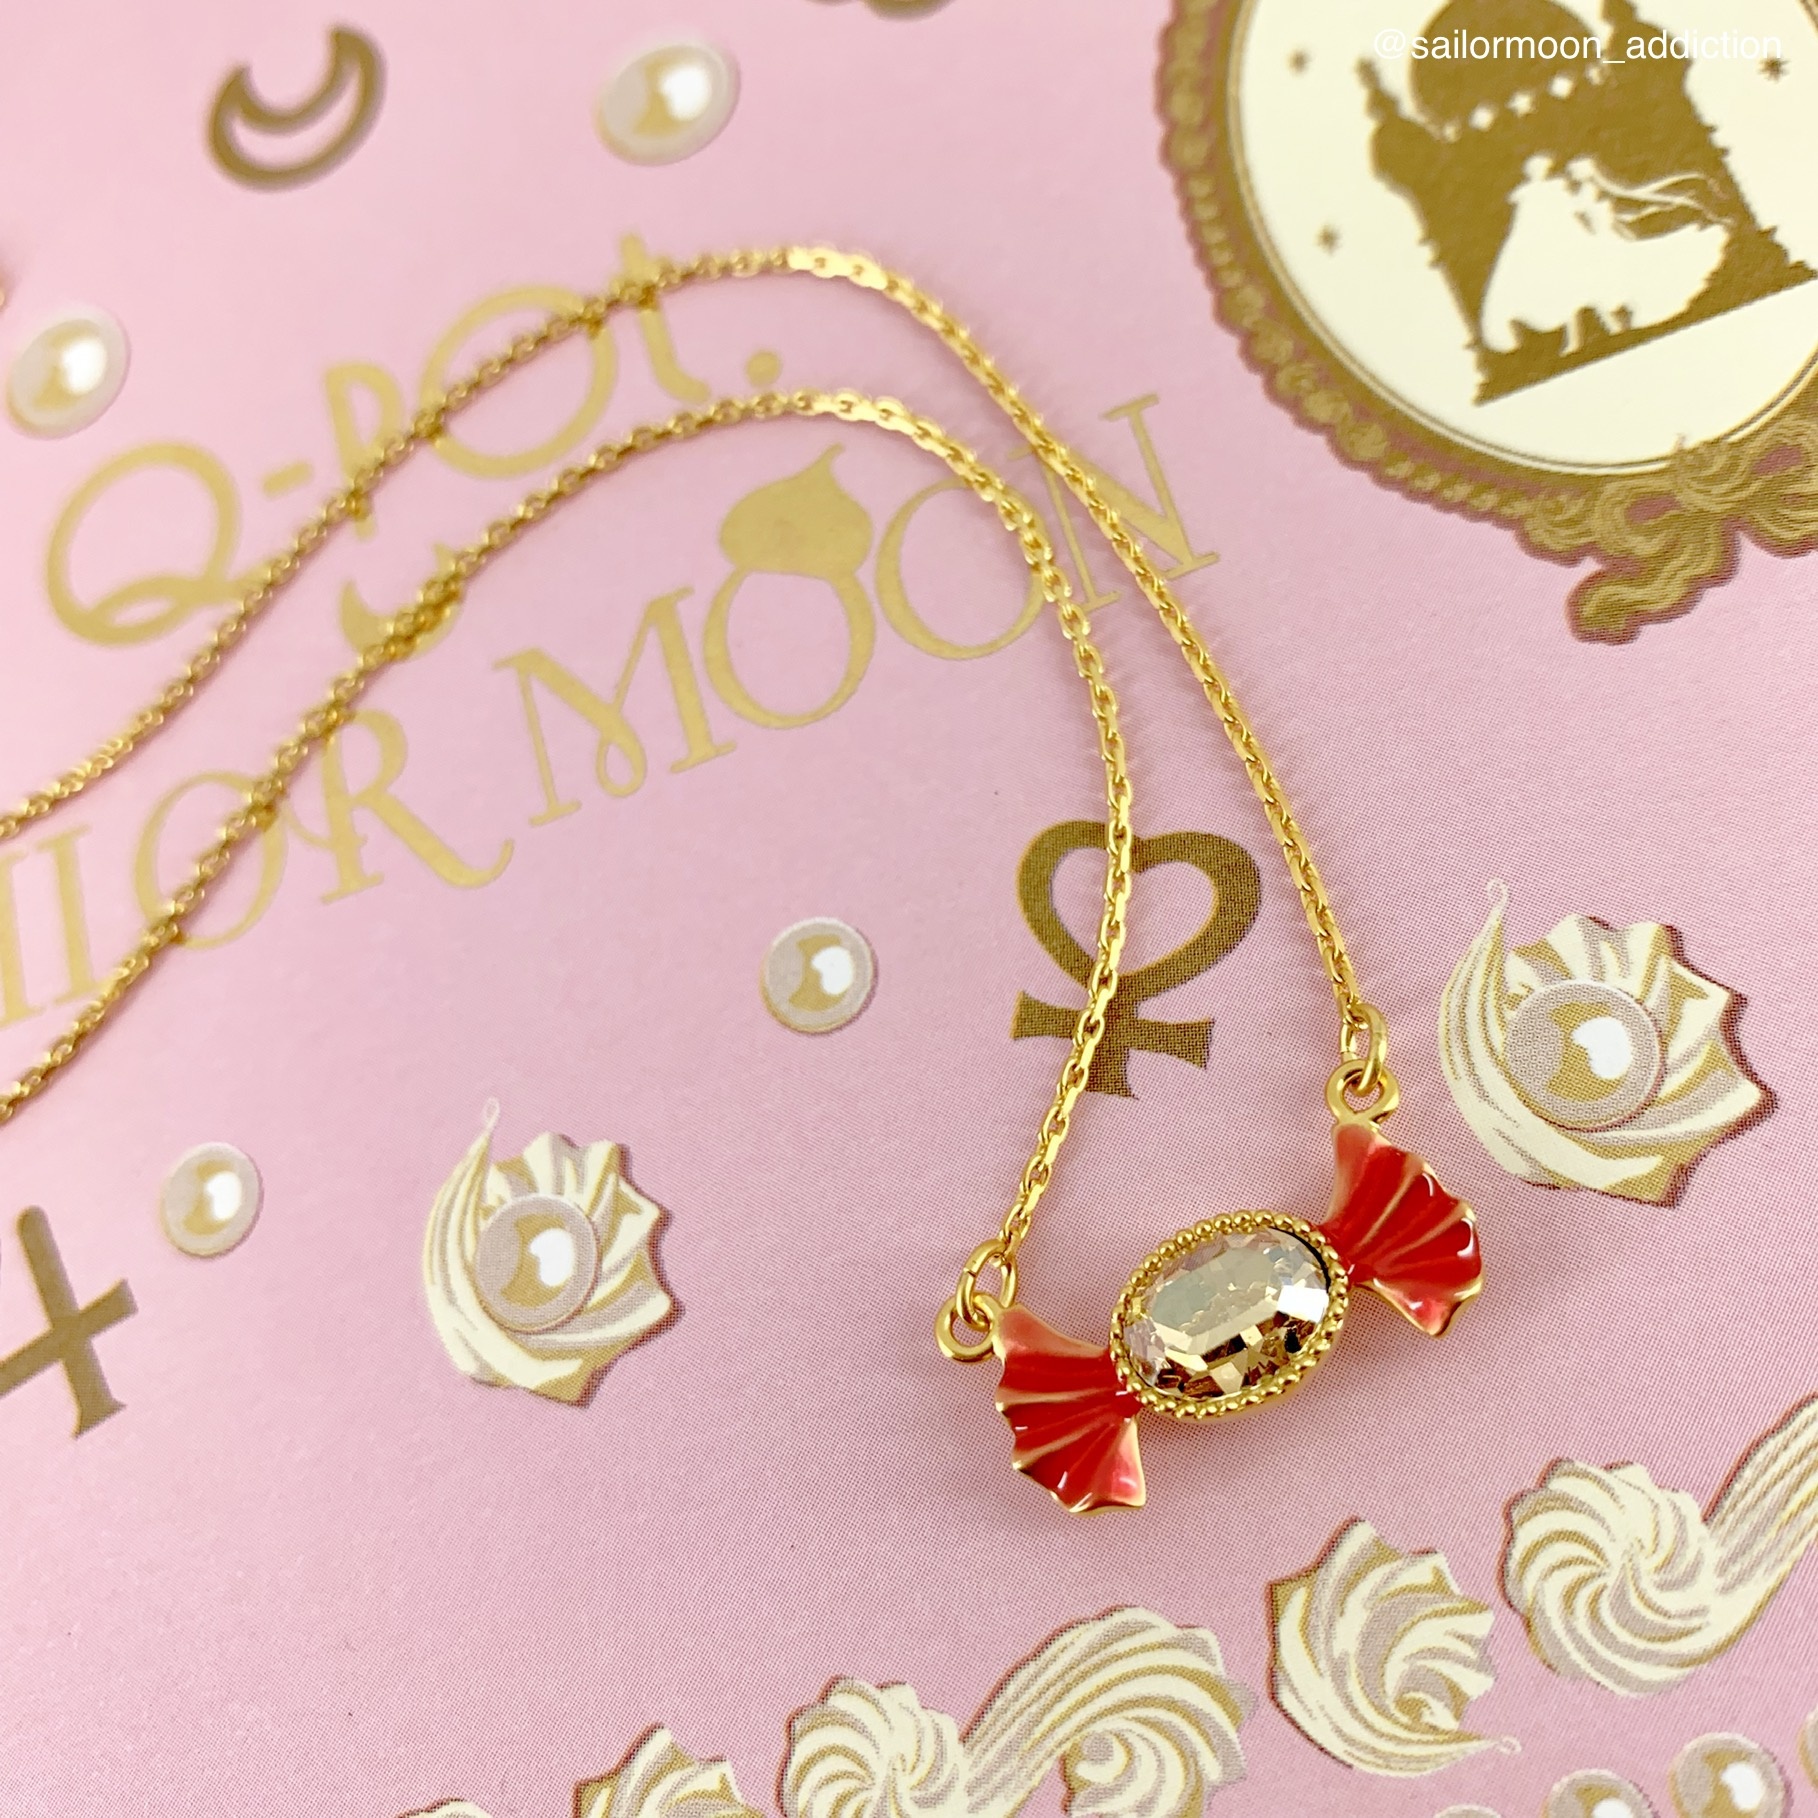 Review - Sailor Moon x Q-Pot 2019 Sailor Petit Jewel Candy Necklace